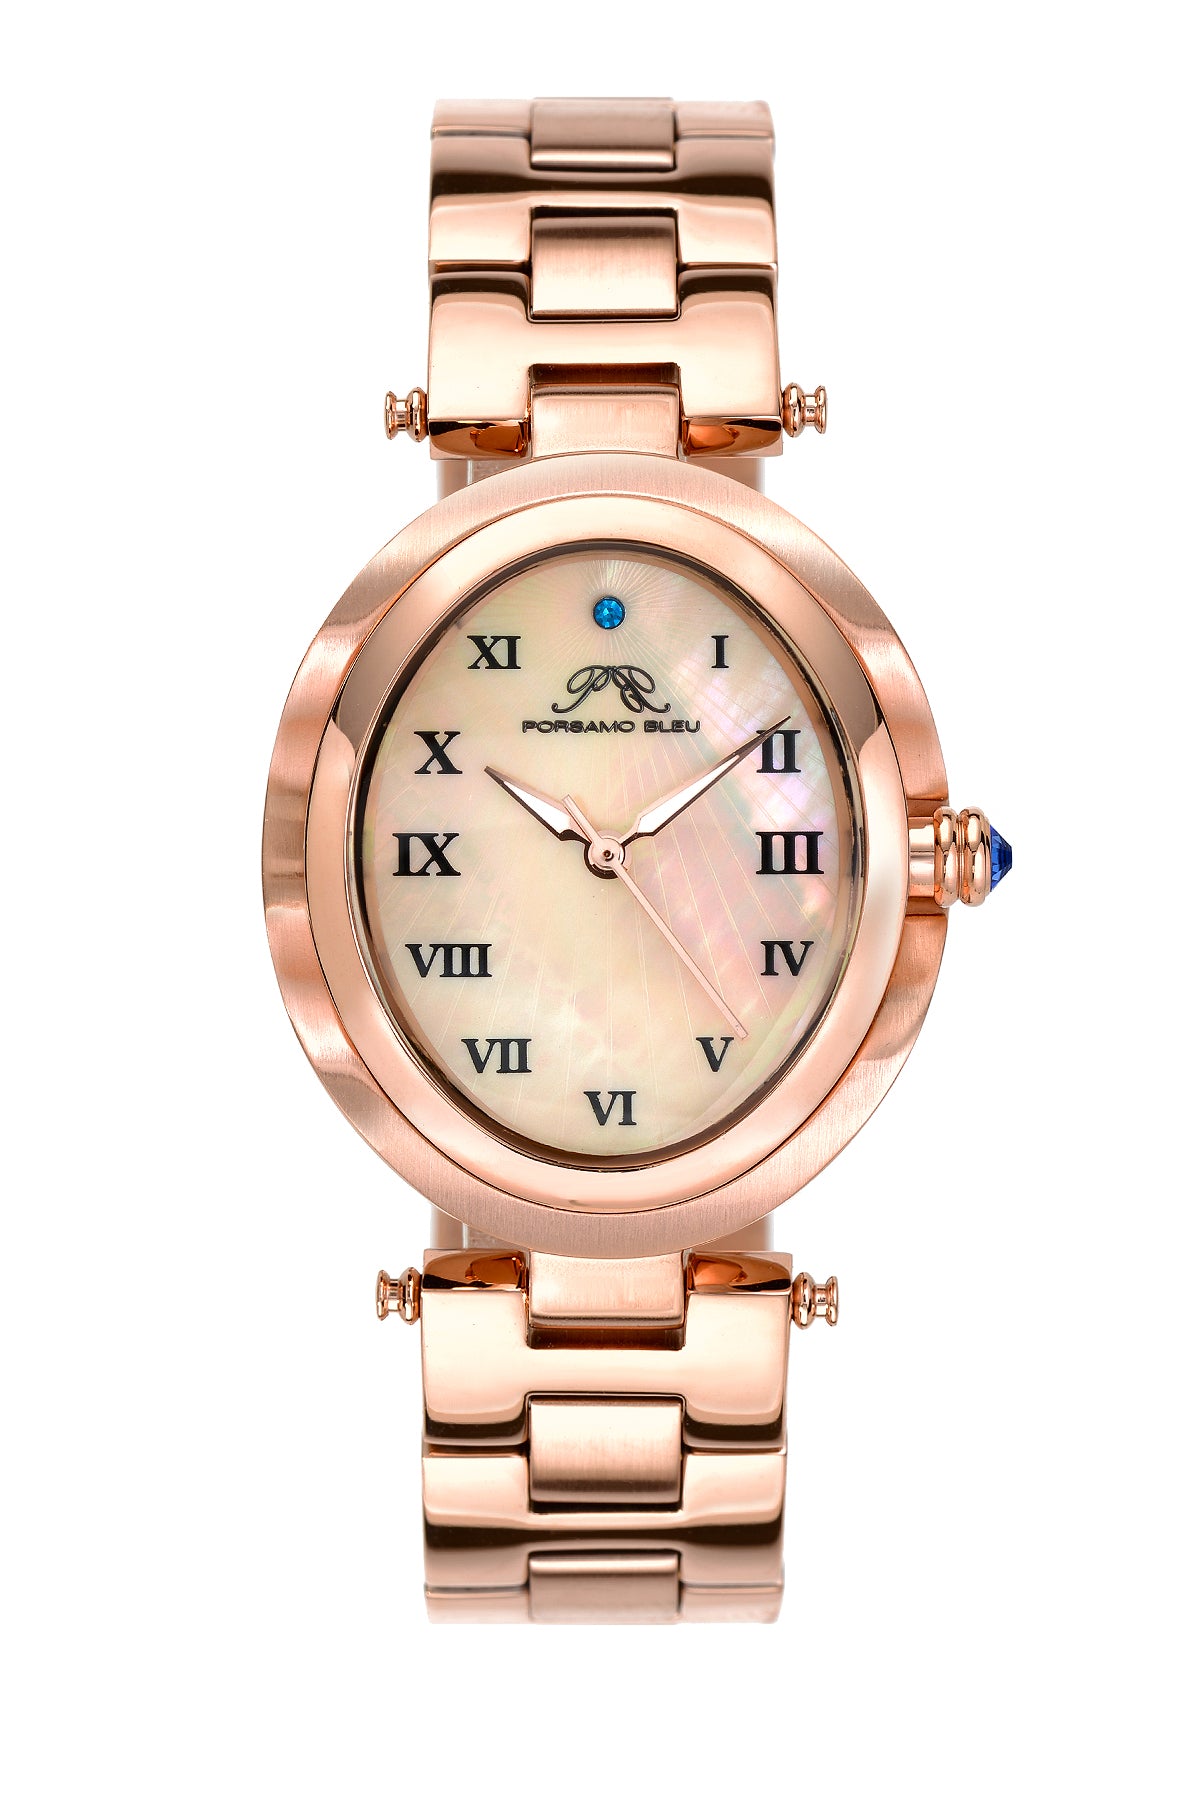 Porsamo Bleu South Sea Oval Luxury Women's Stainless Steel Watch, Rose 105ASSO